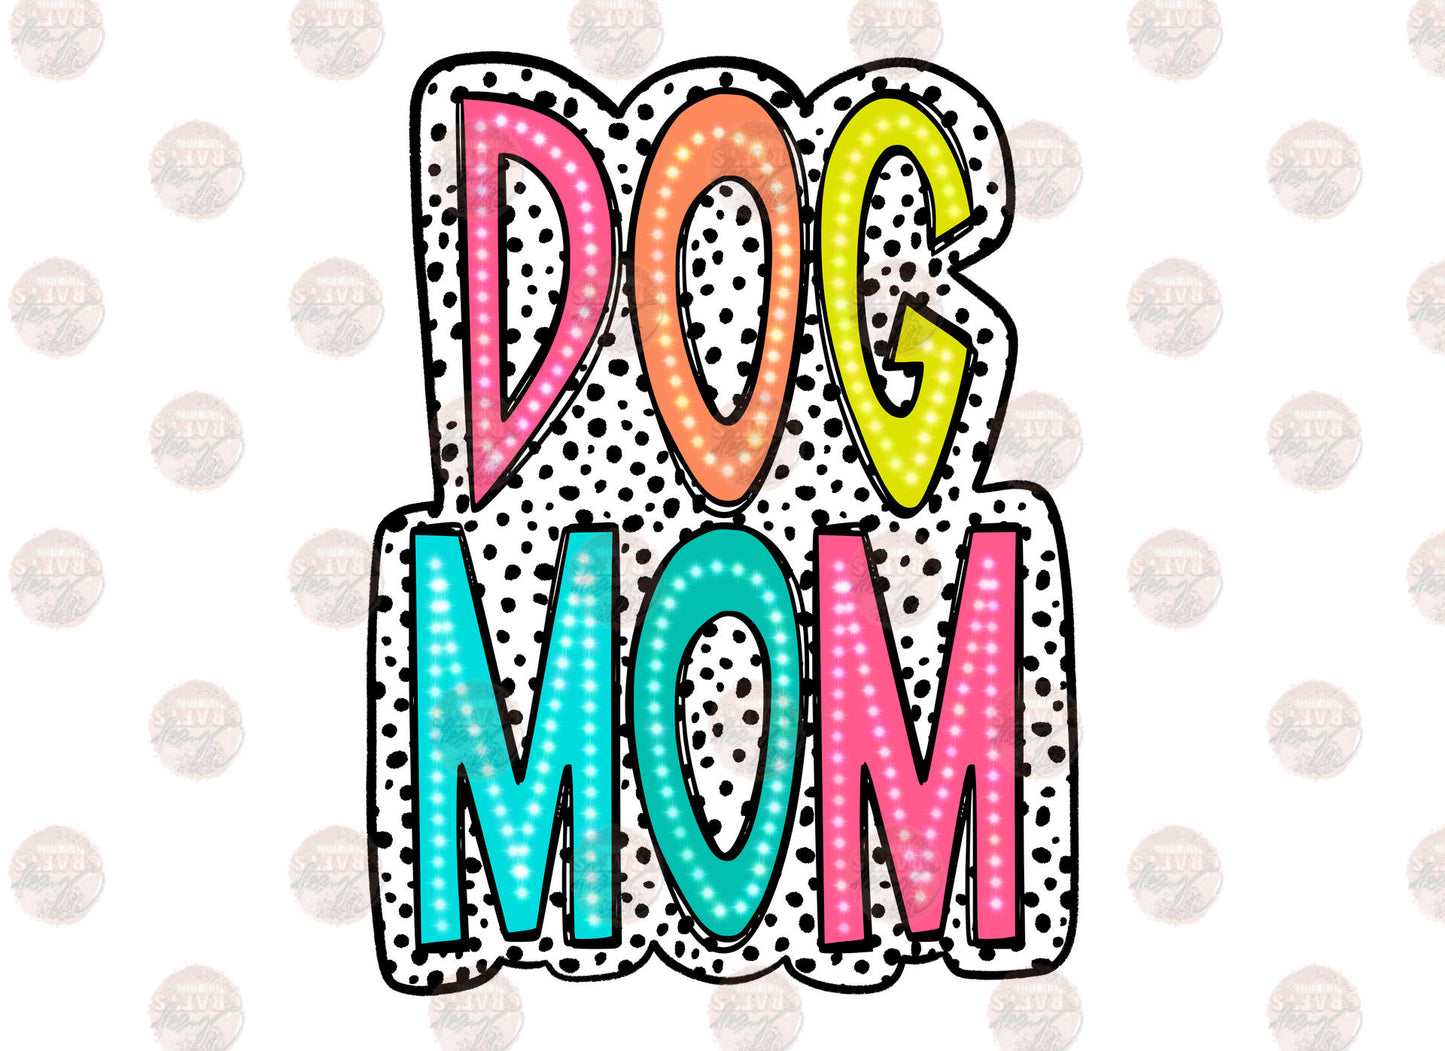 Dog Mom Dalmation Dots Transfer